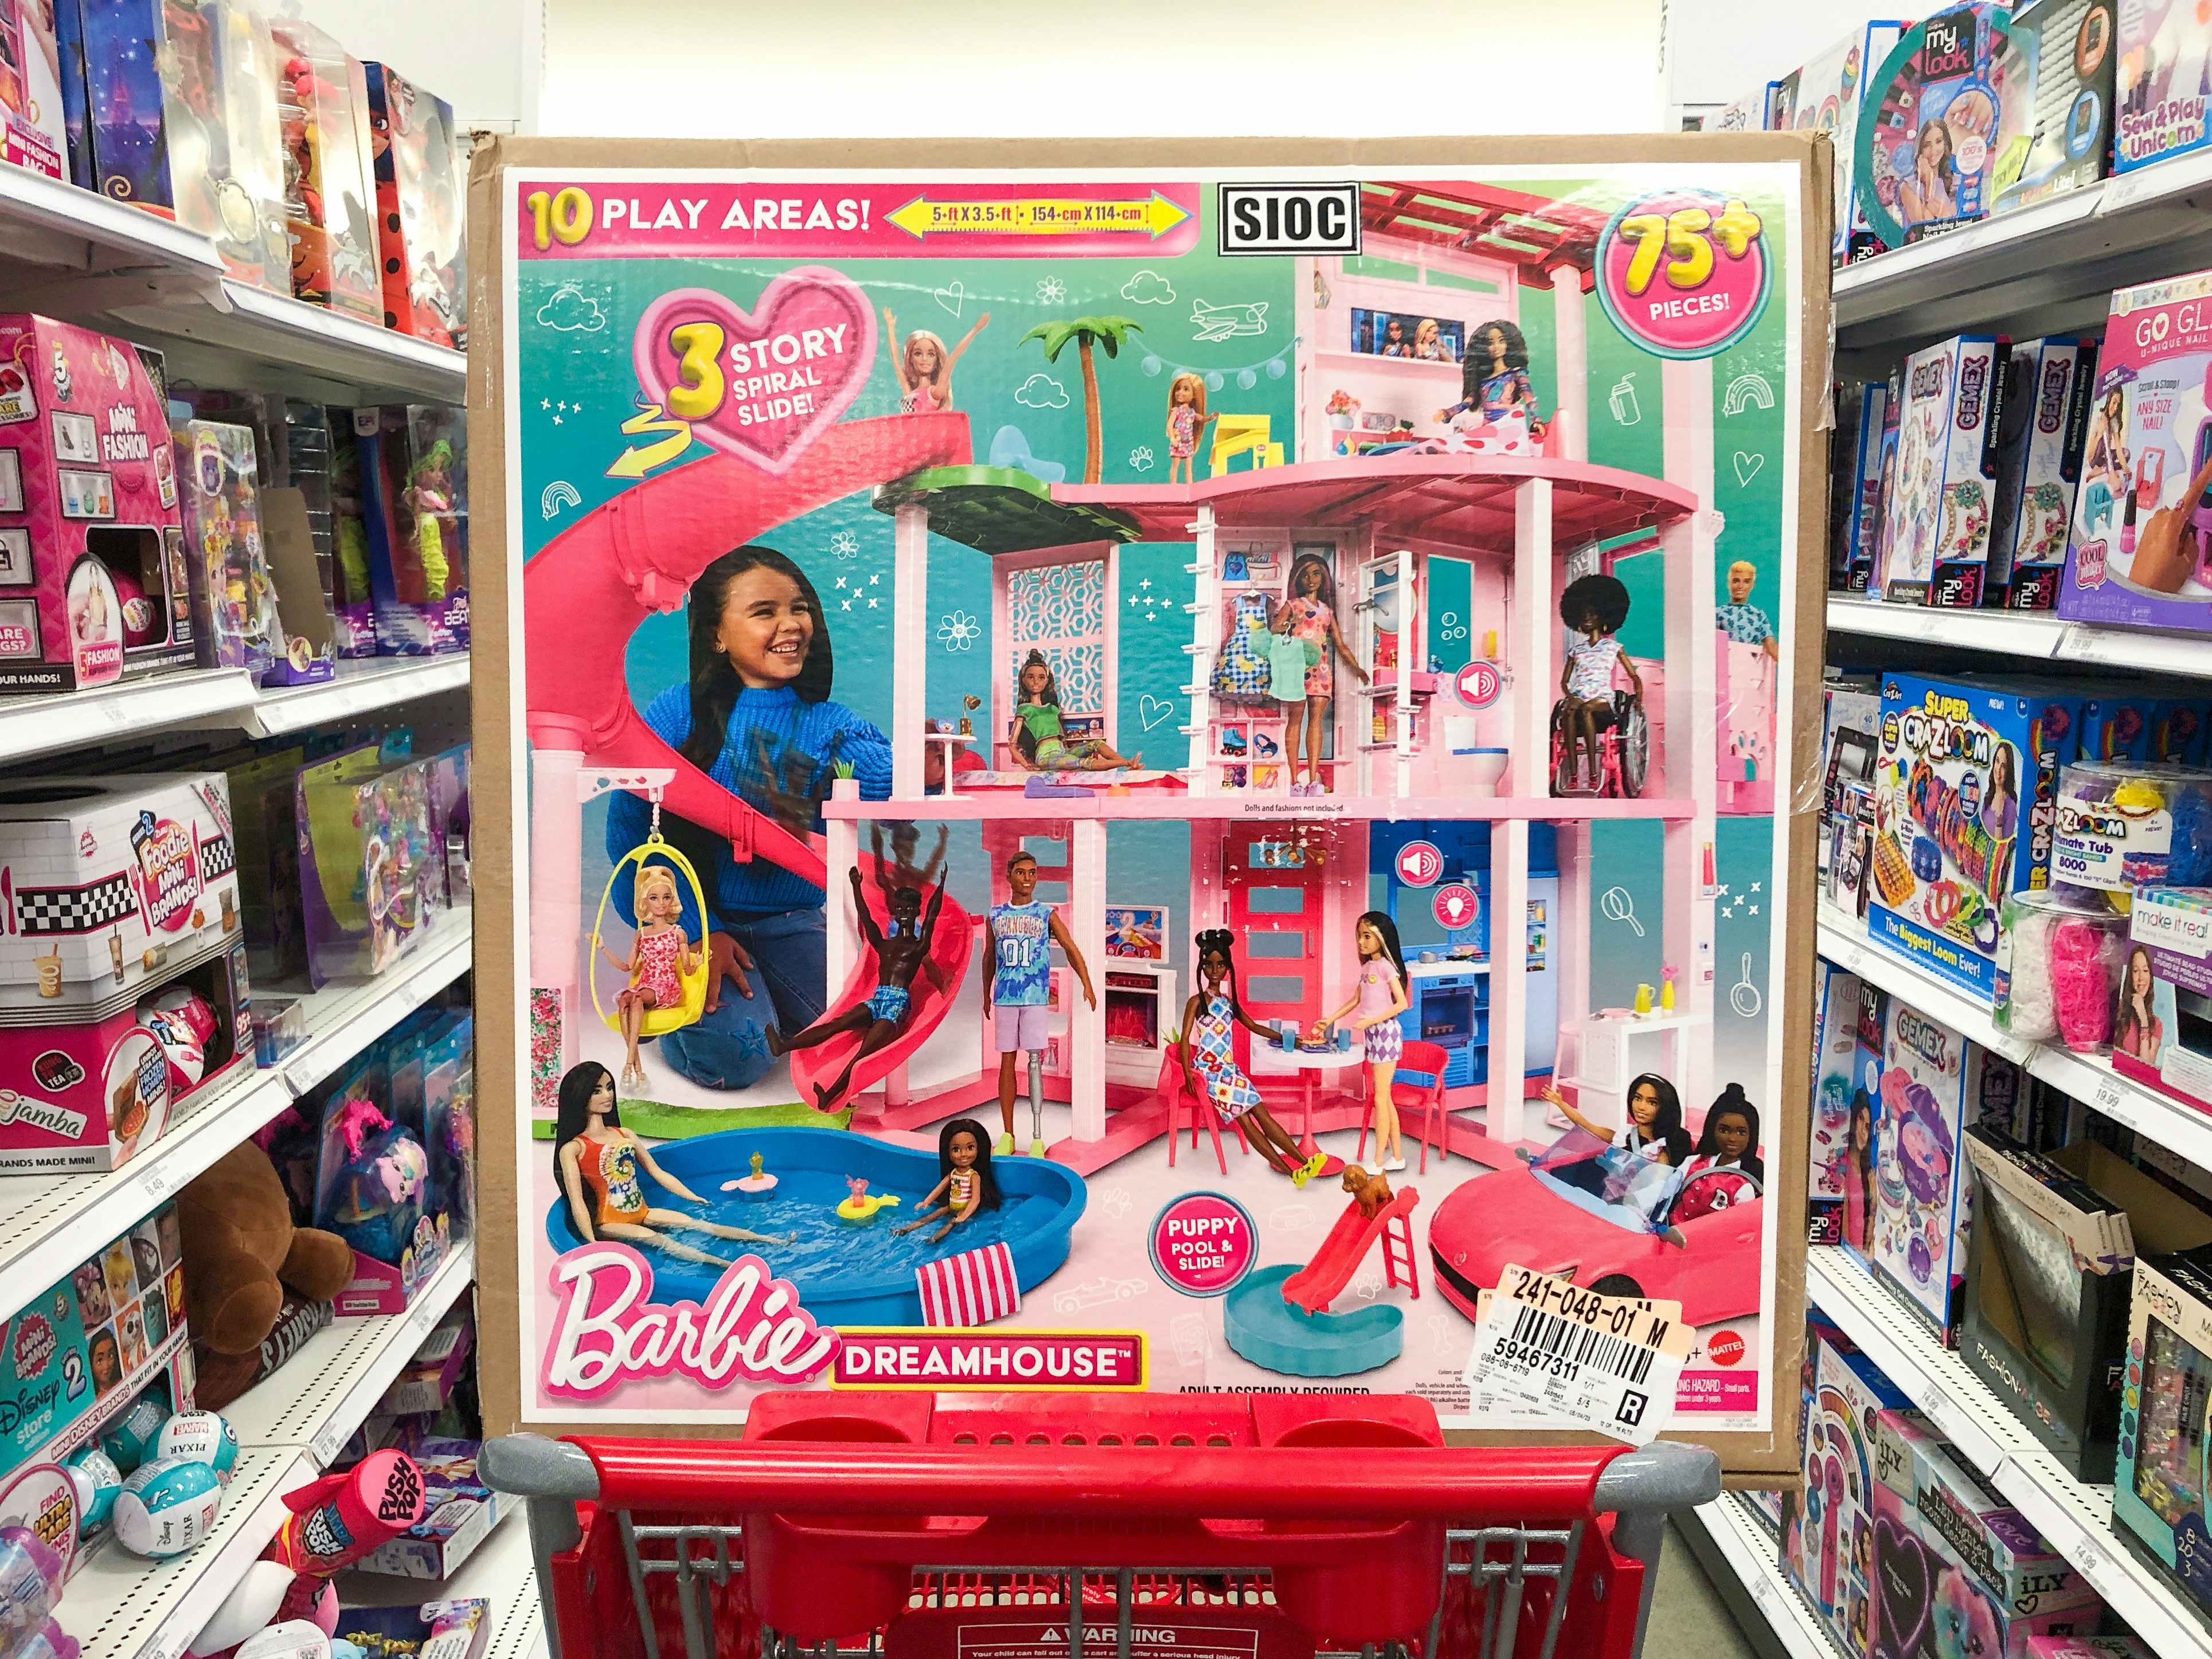 Barbie dreamhouse in cart